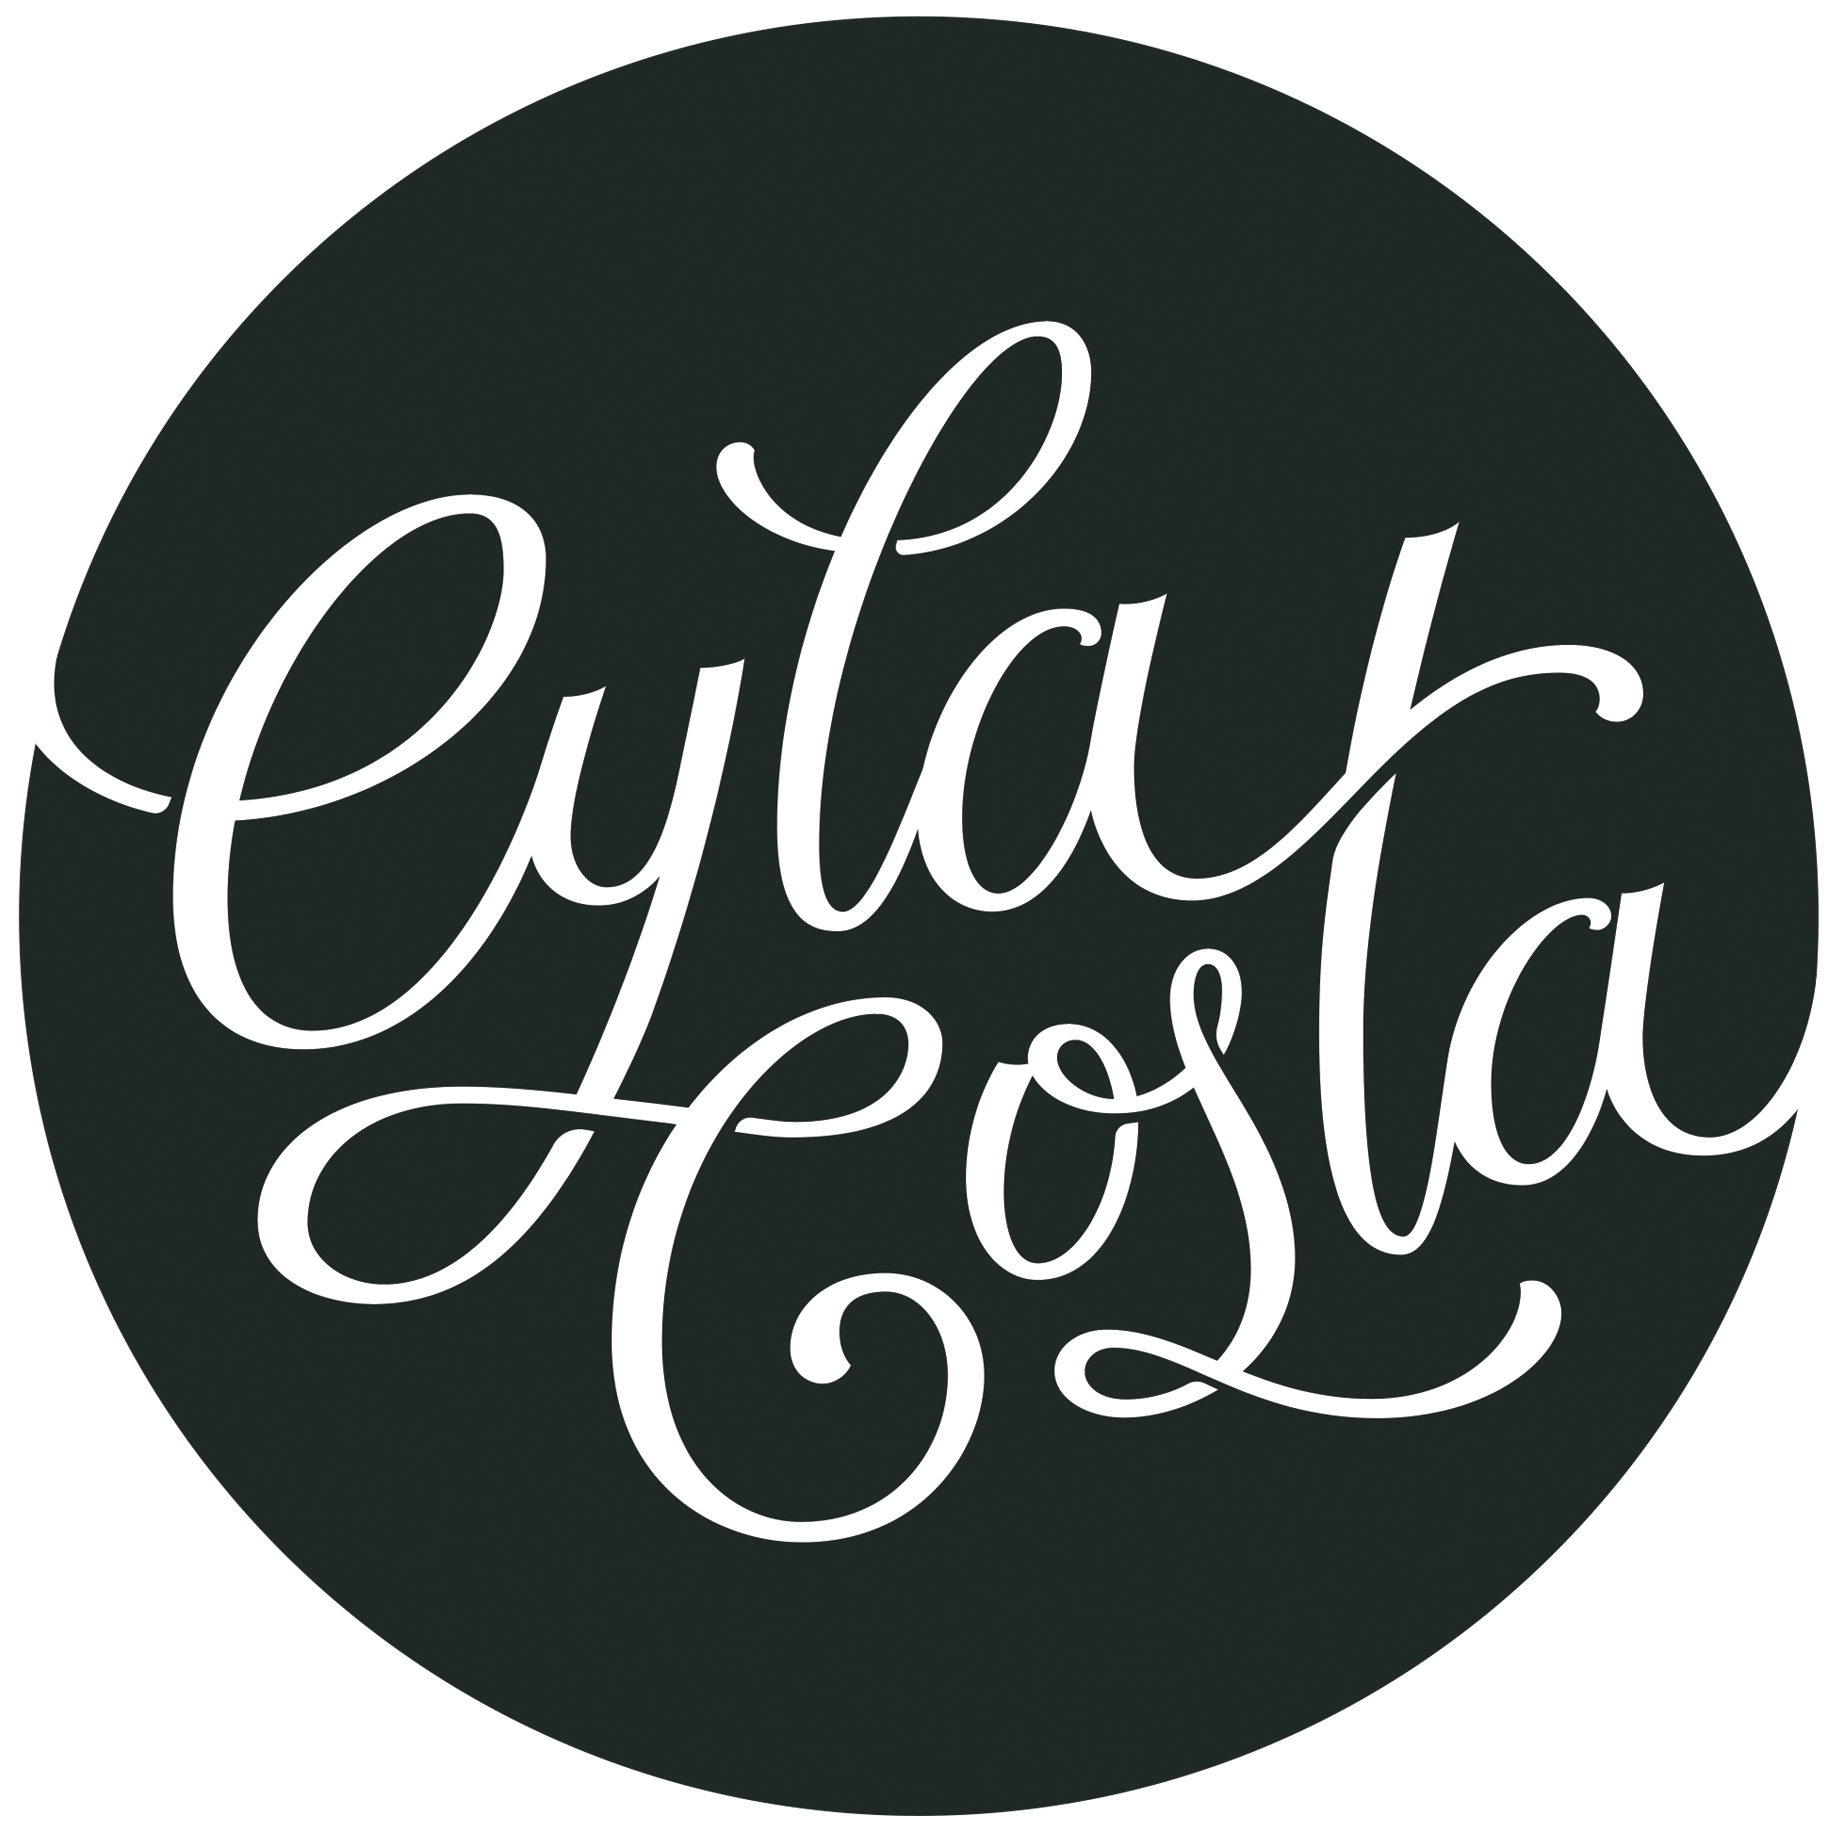 Cyla Costa